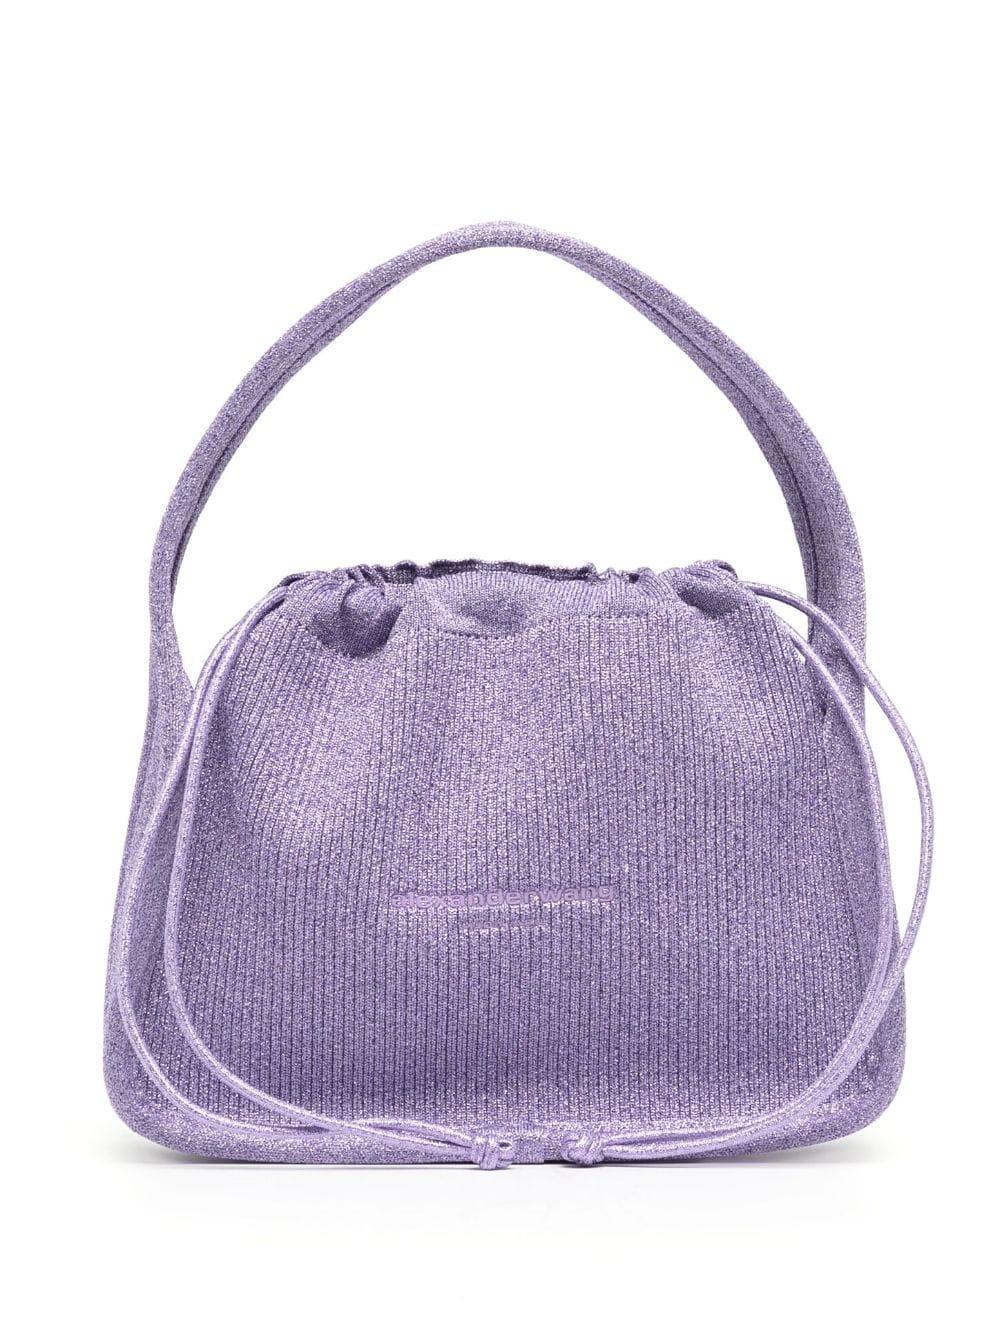 Alexander Wang Small Ryan Drawstring Bag in Purple | Lyst